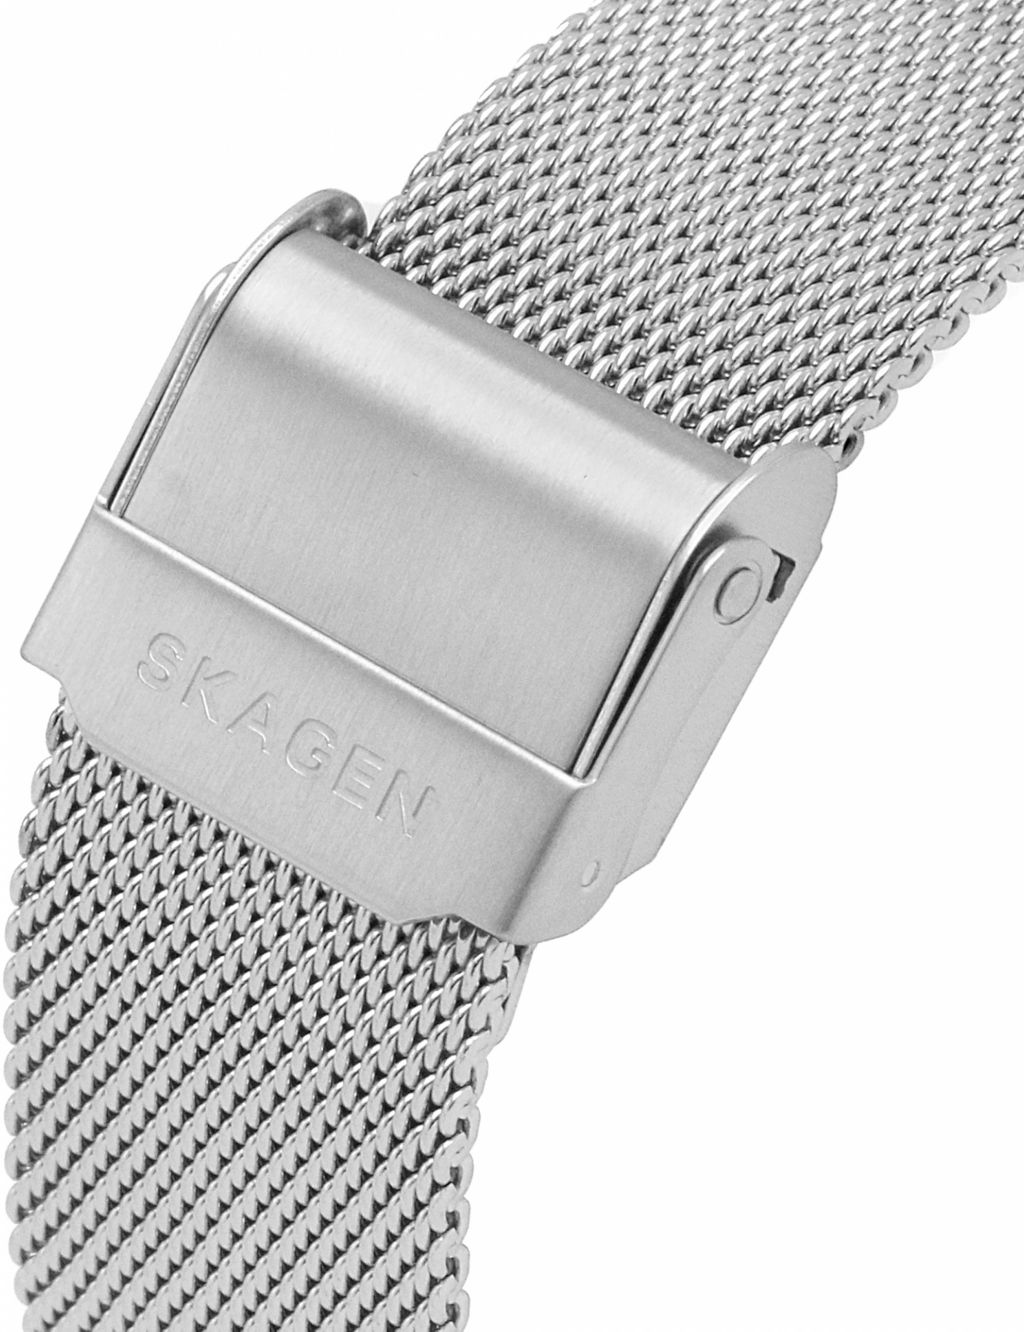 Skagen Signatur Classic Mesh Stainless Steel Watch image 7